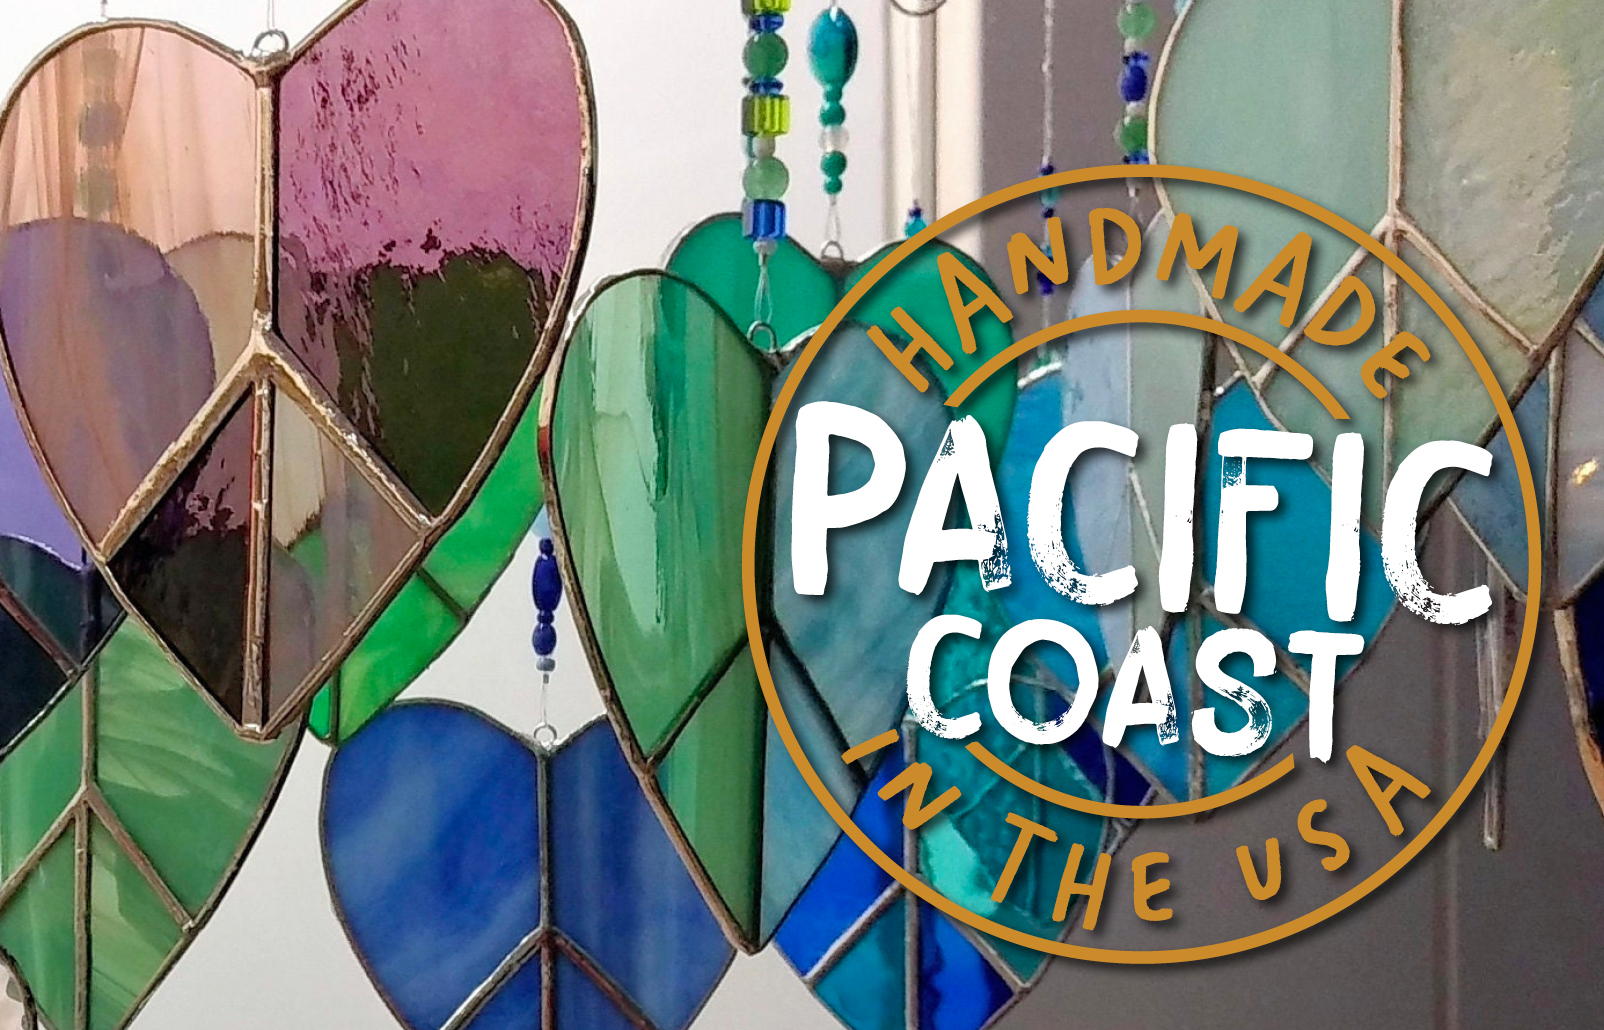 Shop Local: Handmade on the Pacific Coast